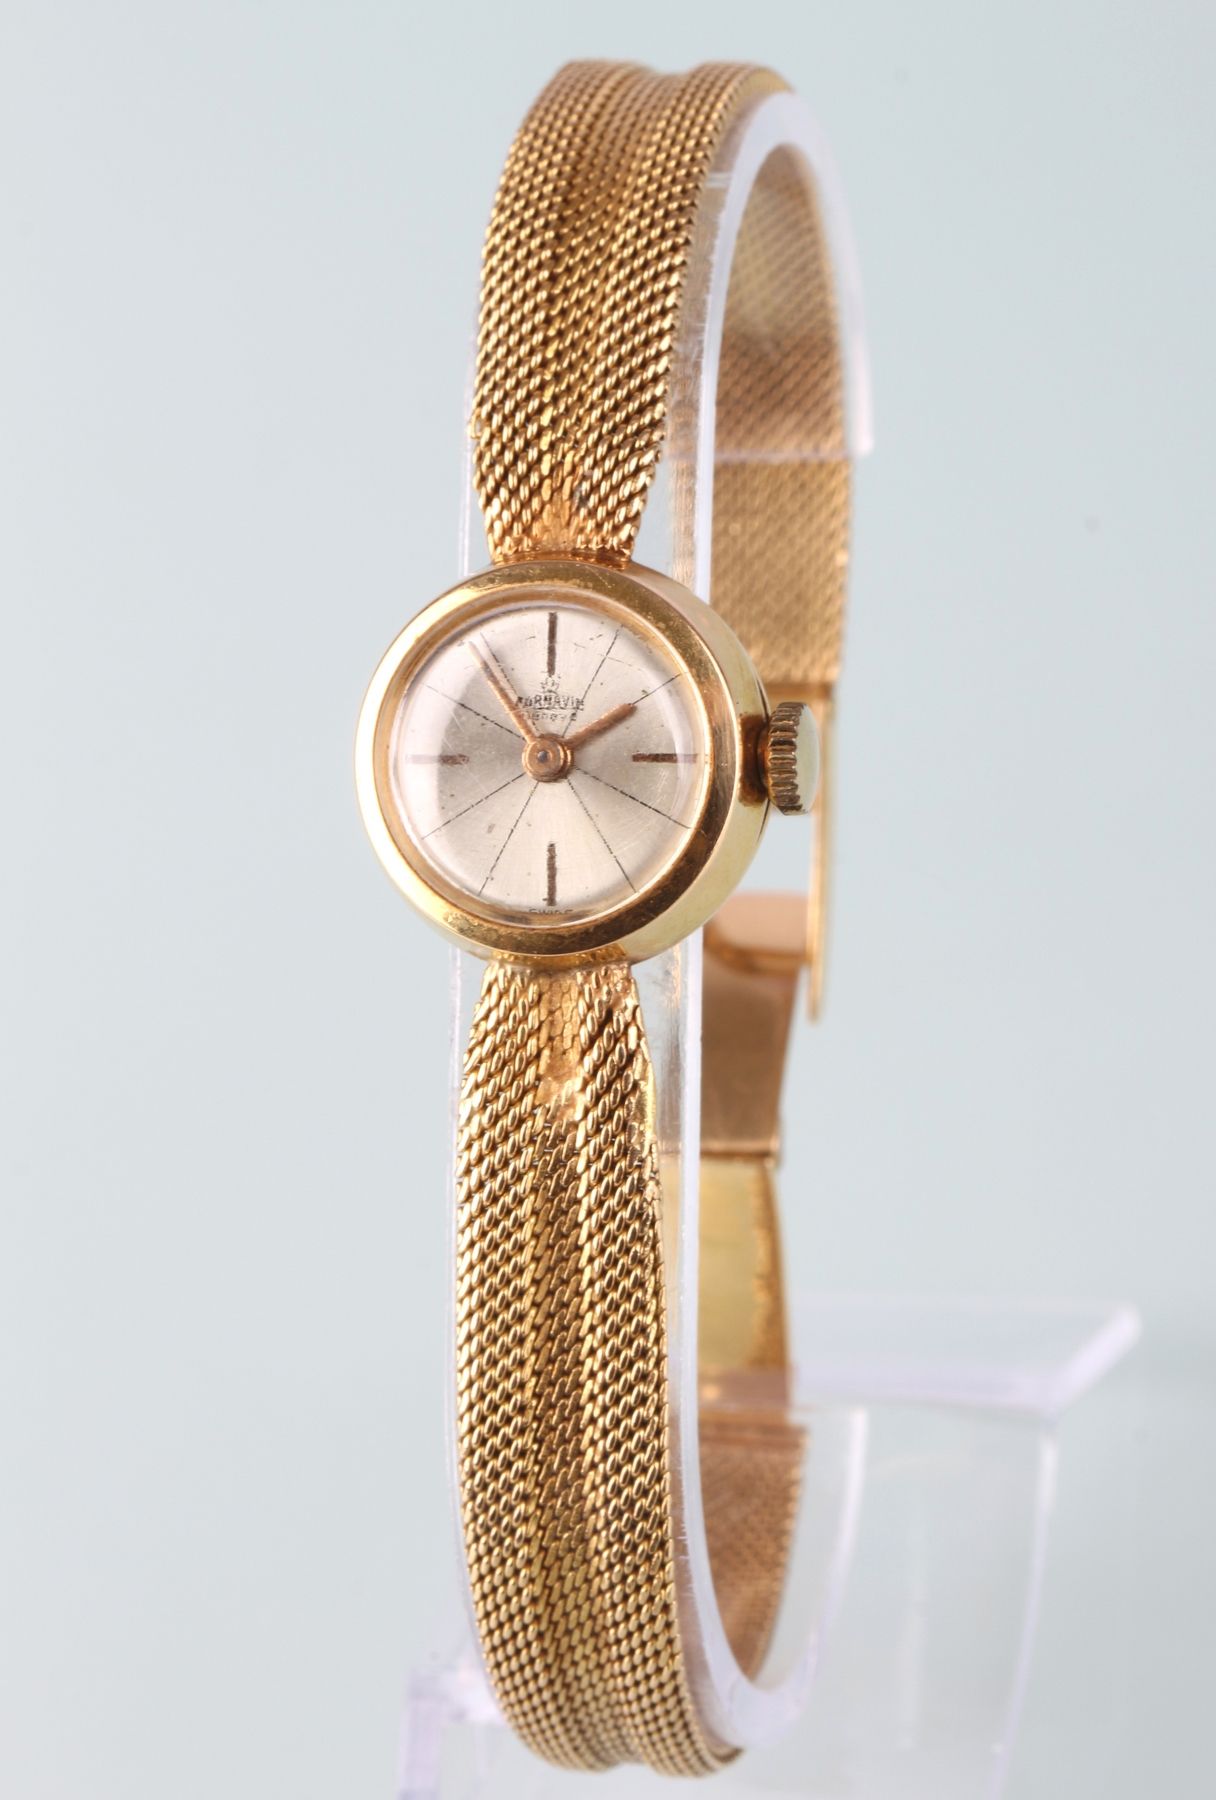 750 Gold Cornavin Geneve Armbanduhr, 18K gold wristwatch, Reloj de pulsera suizo&hellip;